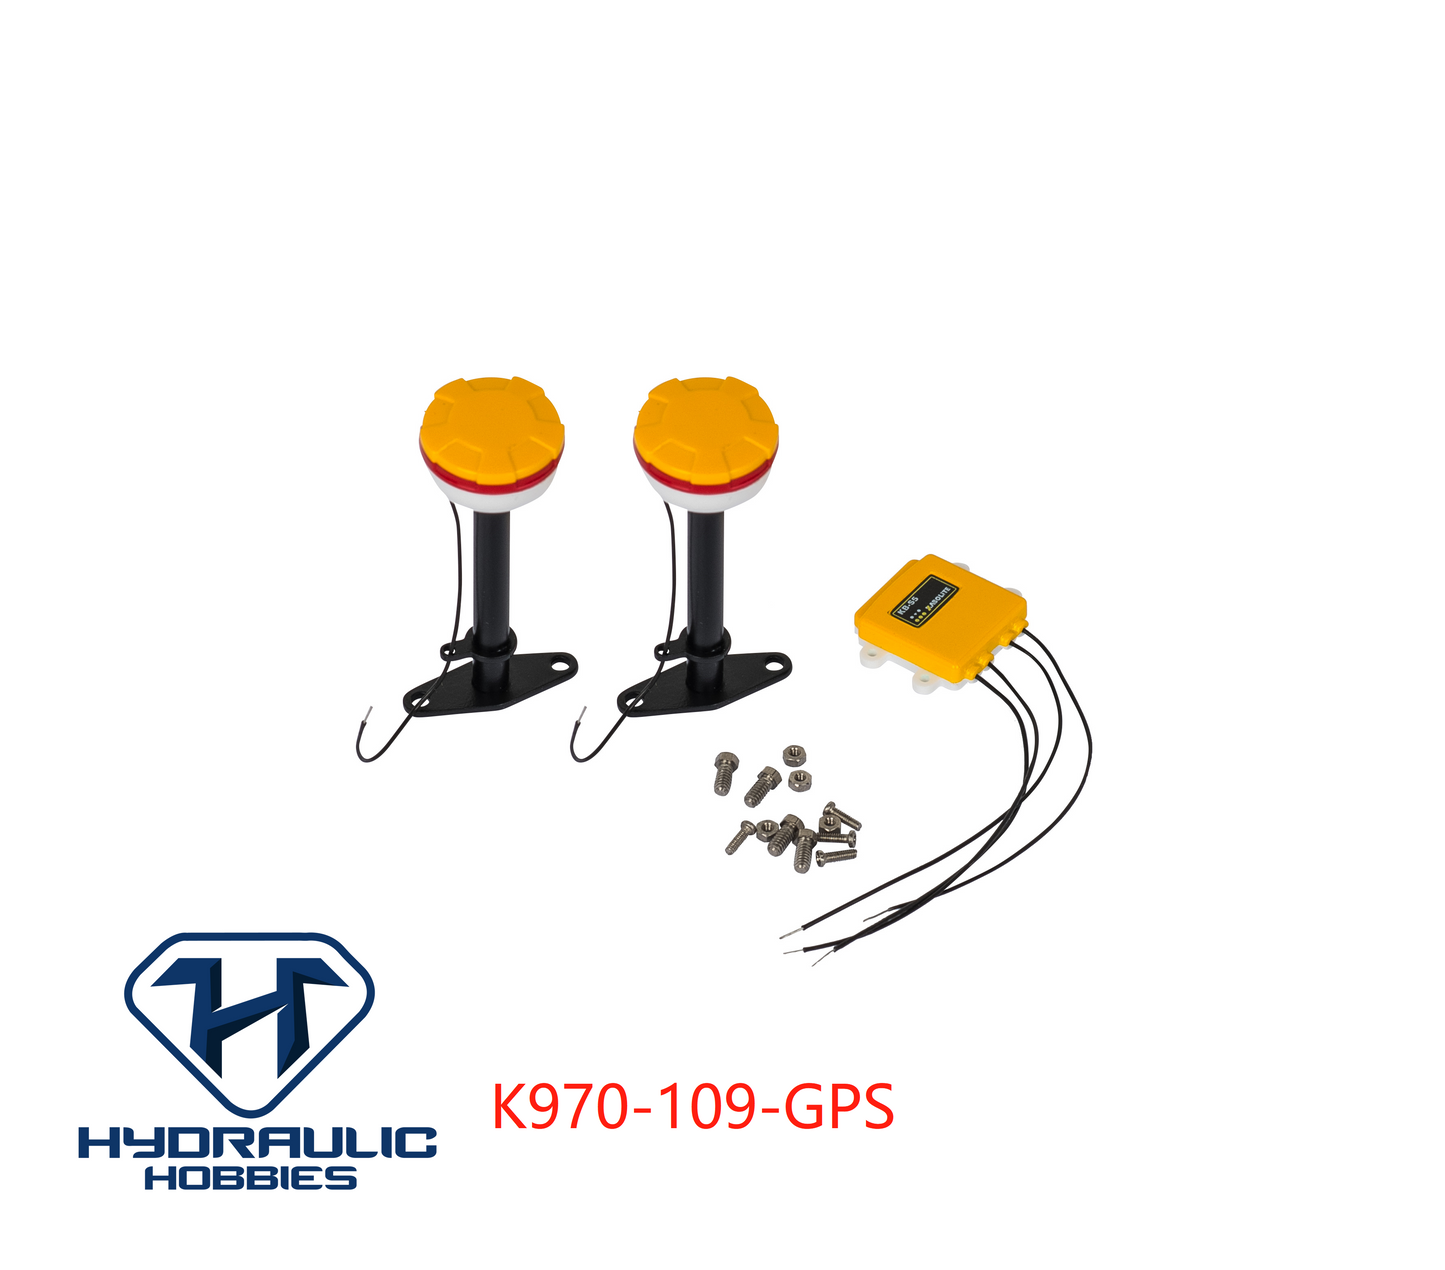 Kabolite K970-109 GPS